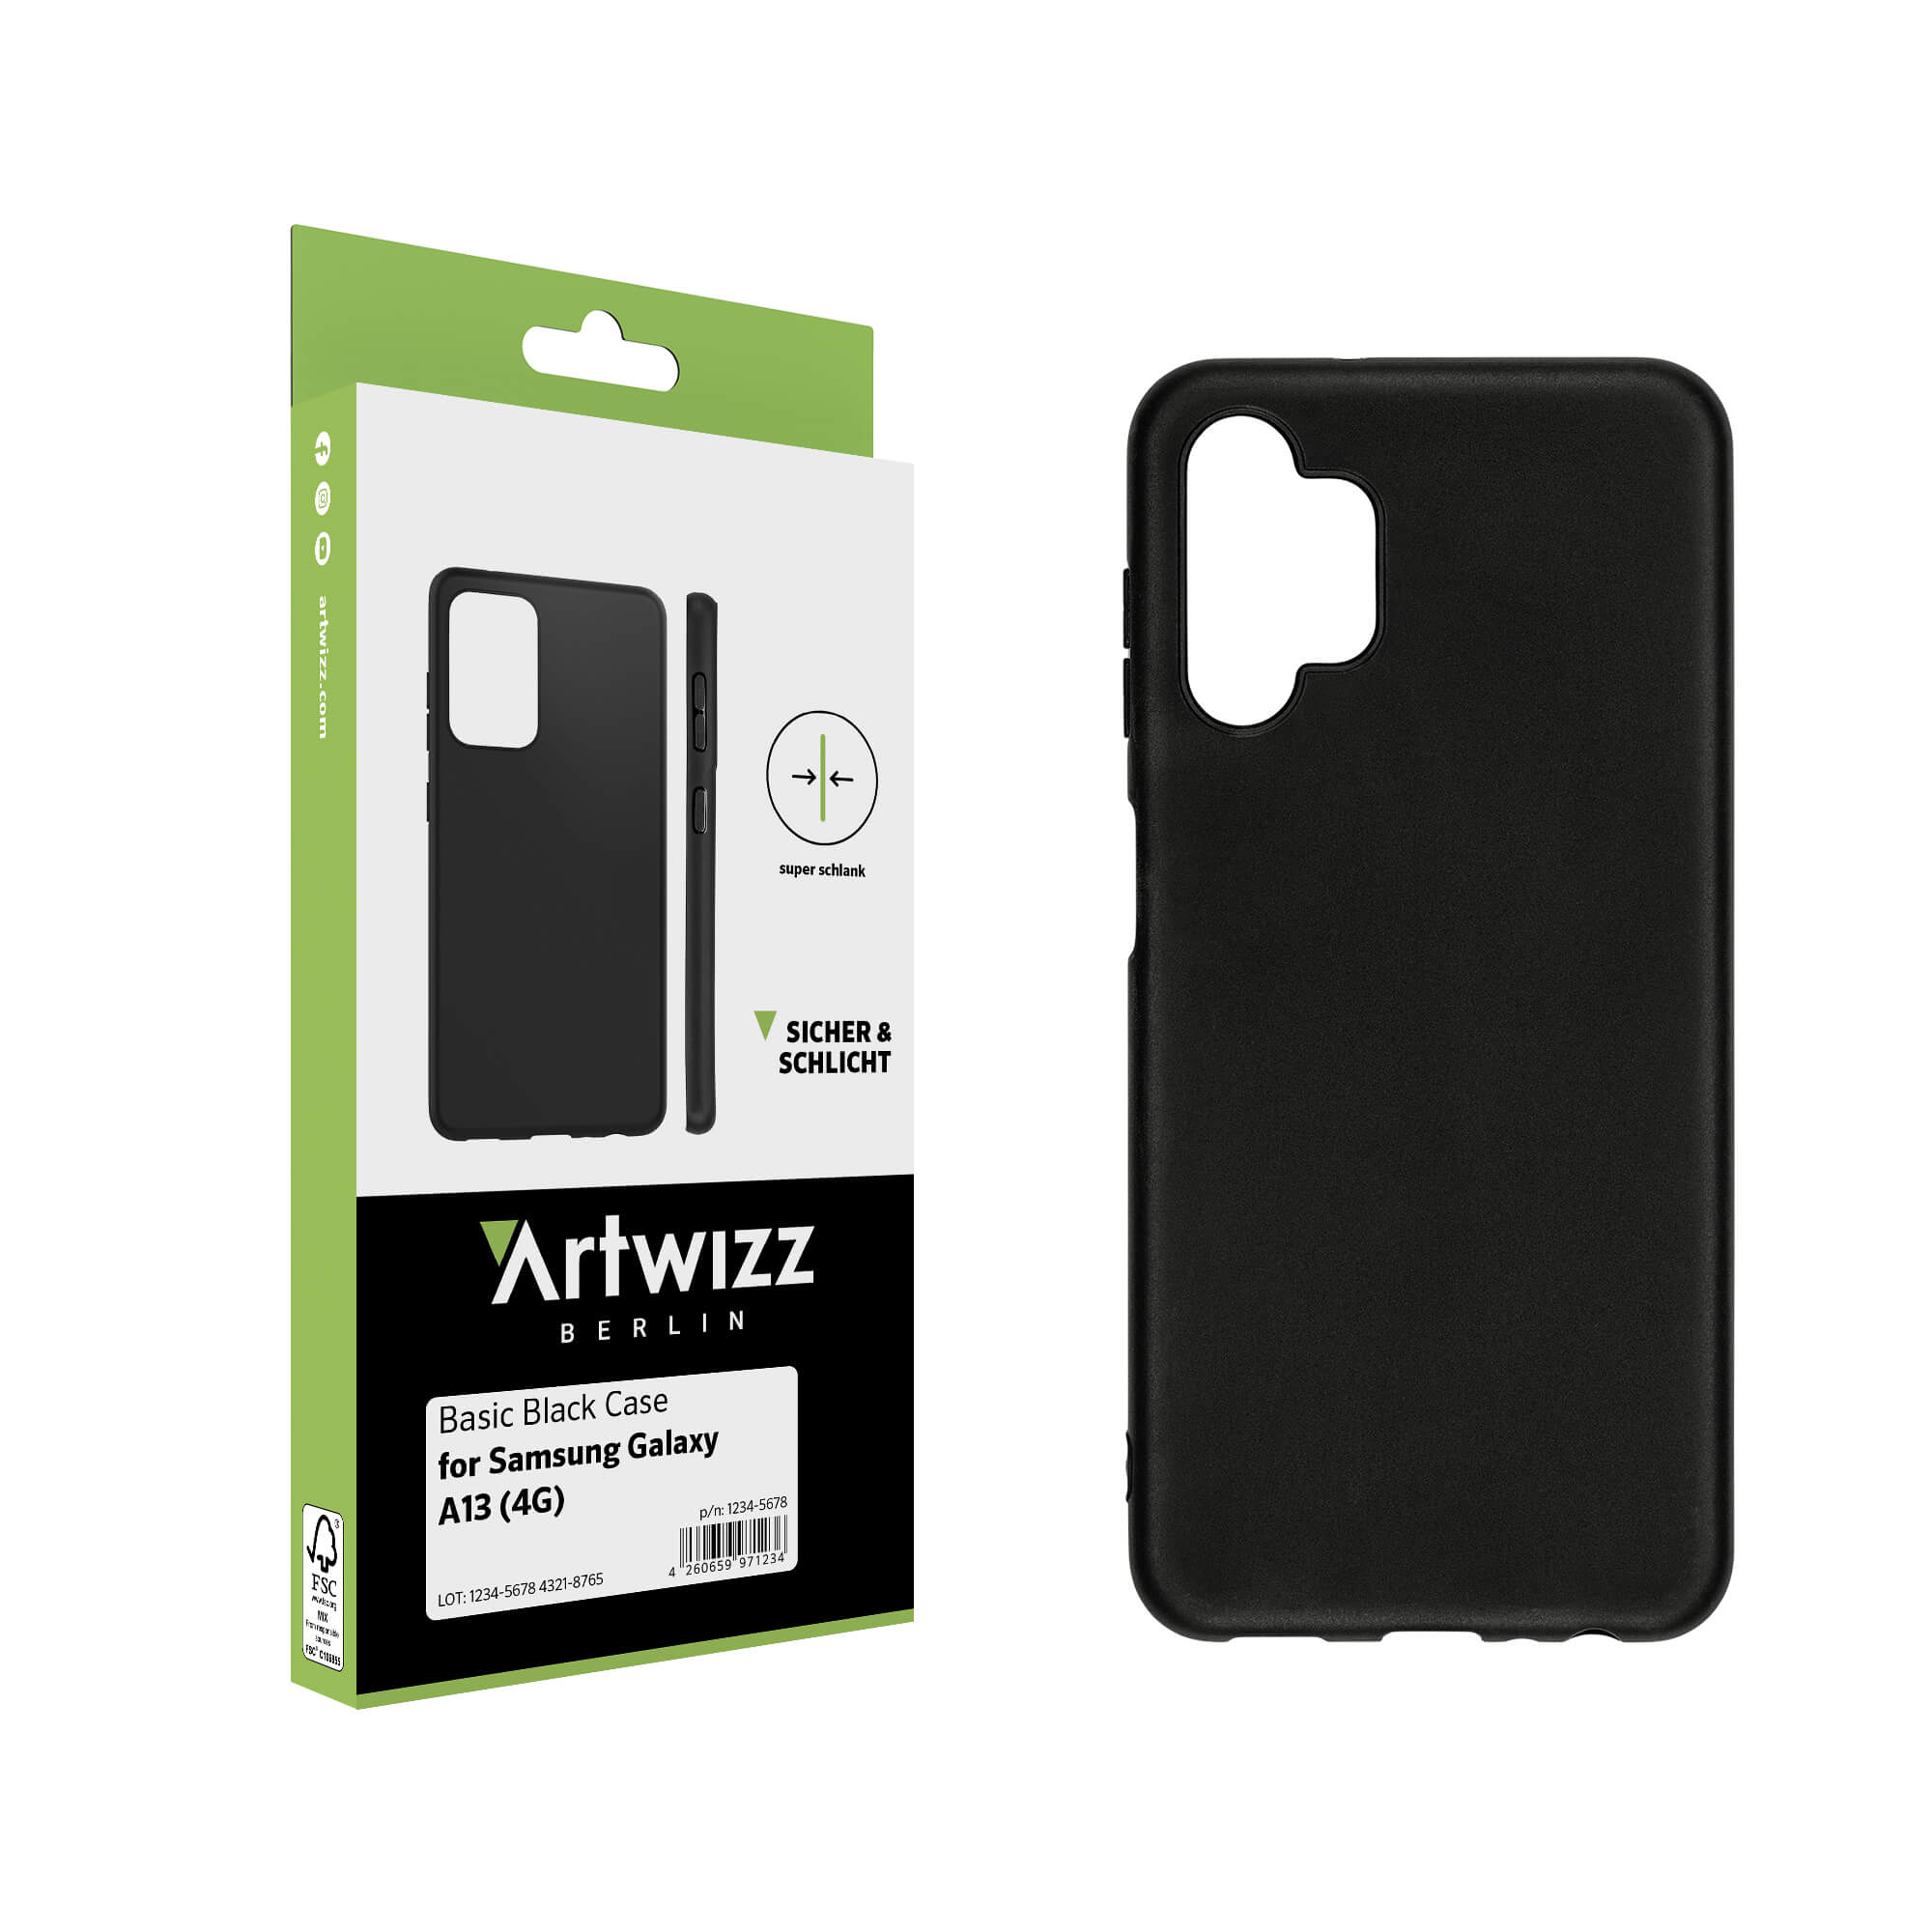 ARTWIZZ Basic Black Schwarz (4G), Samsung, Backcover, A13 Galaxy Case